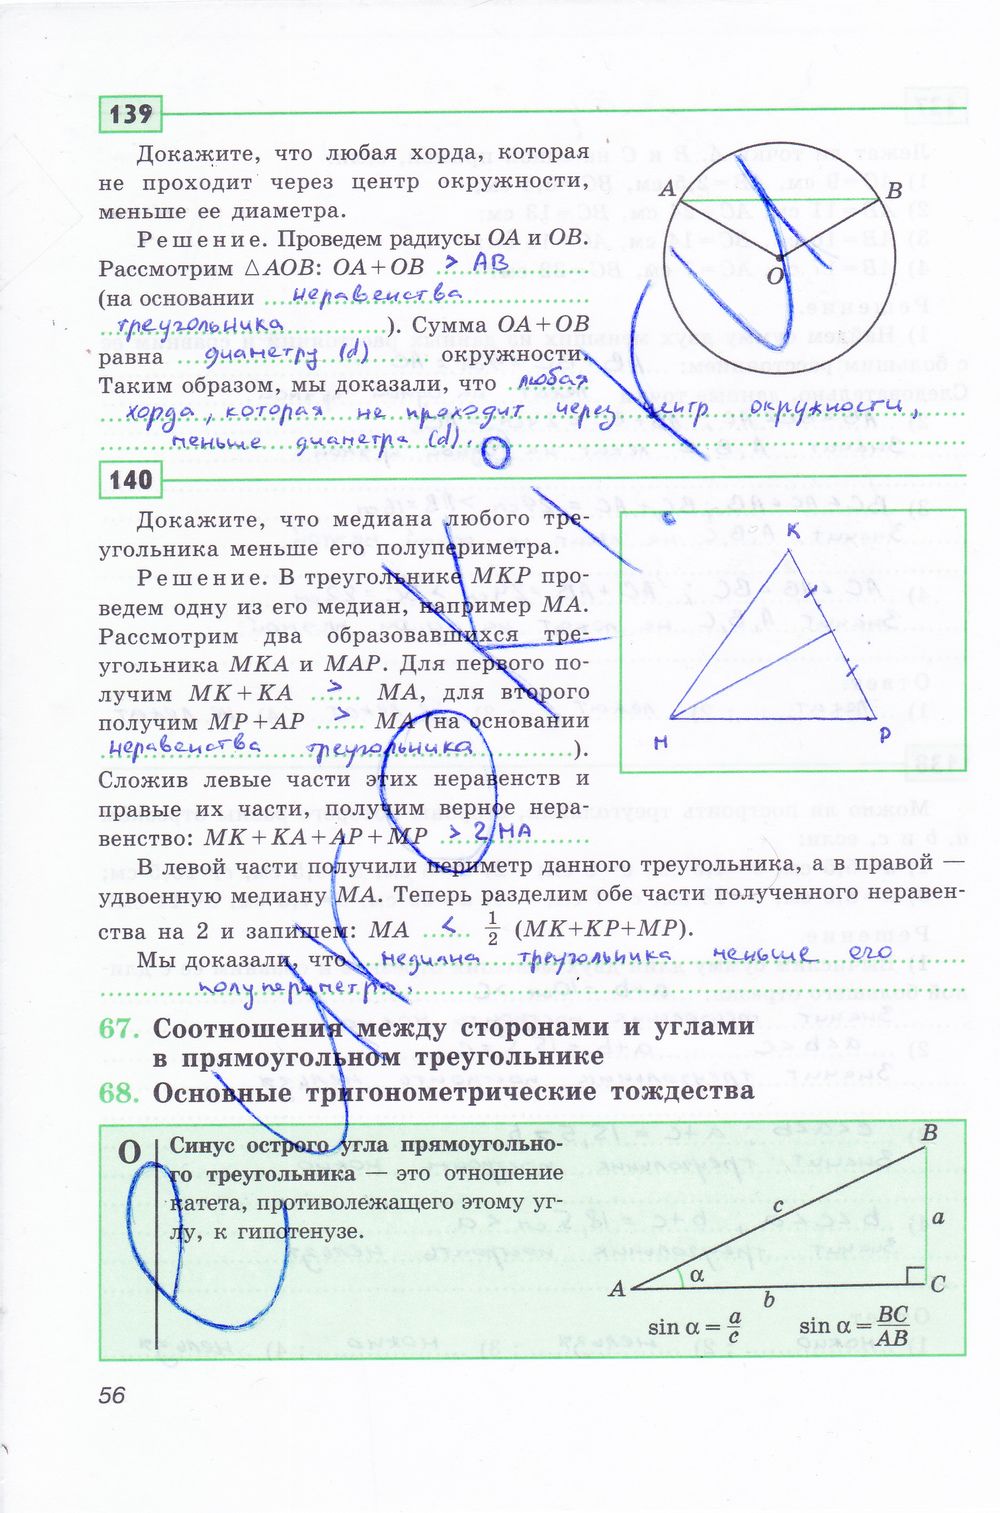 ГДЗ Геометрия 8 класс - стр. 56